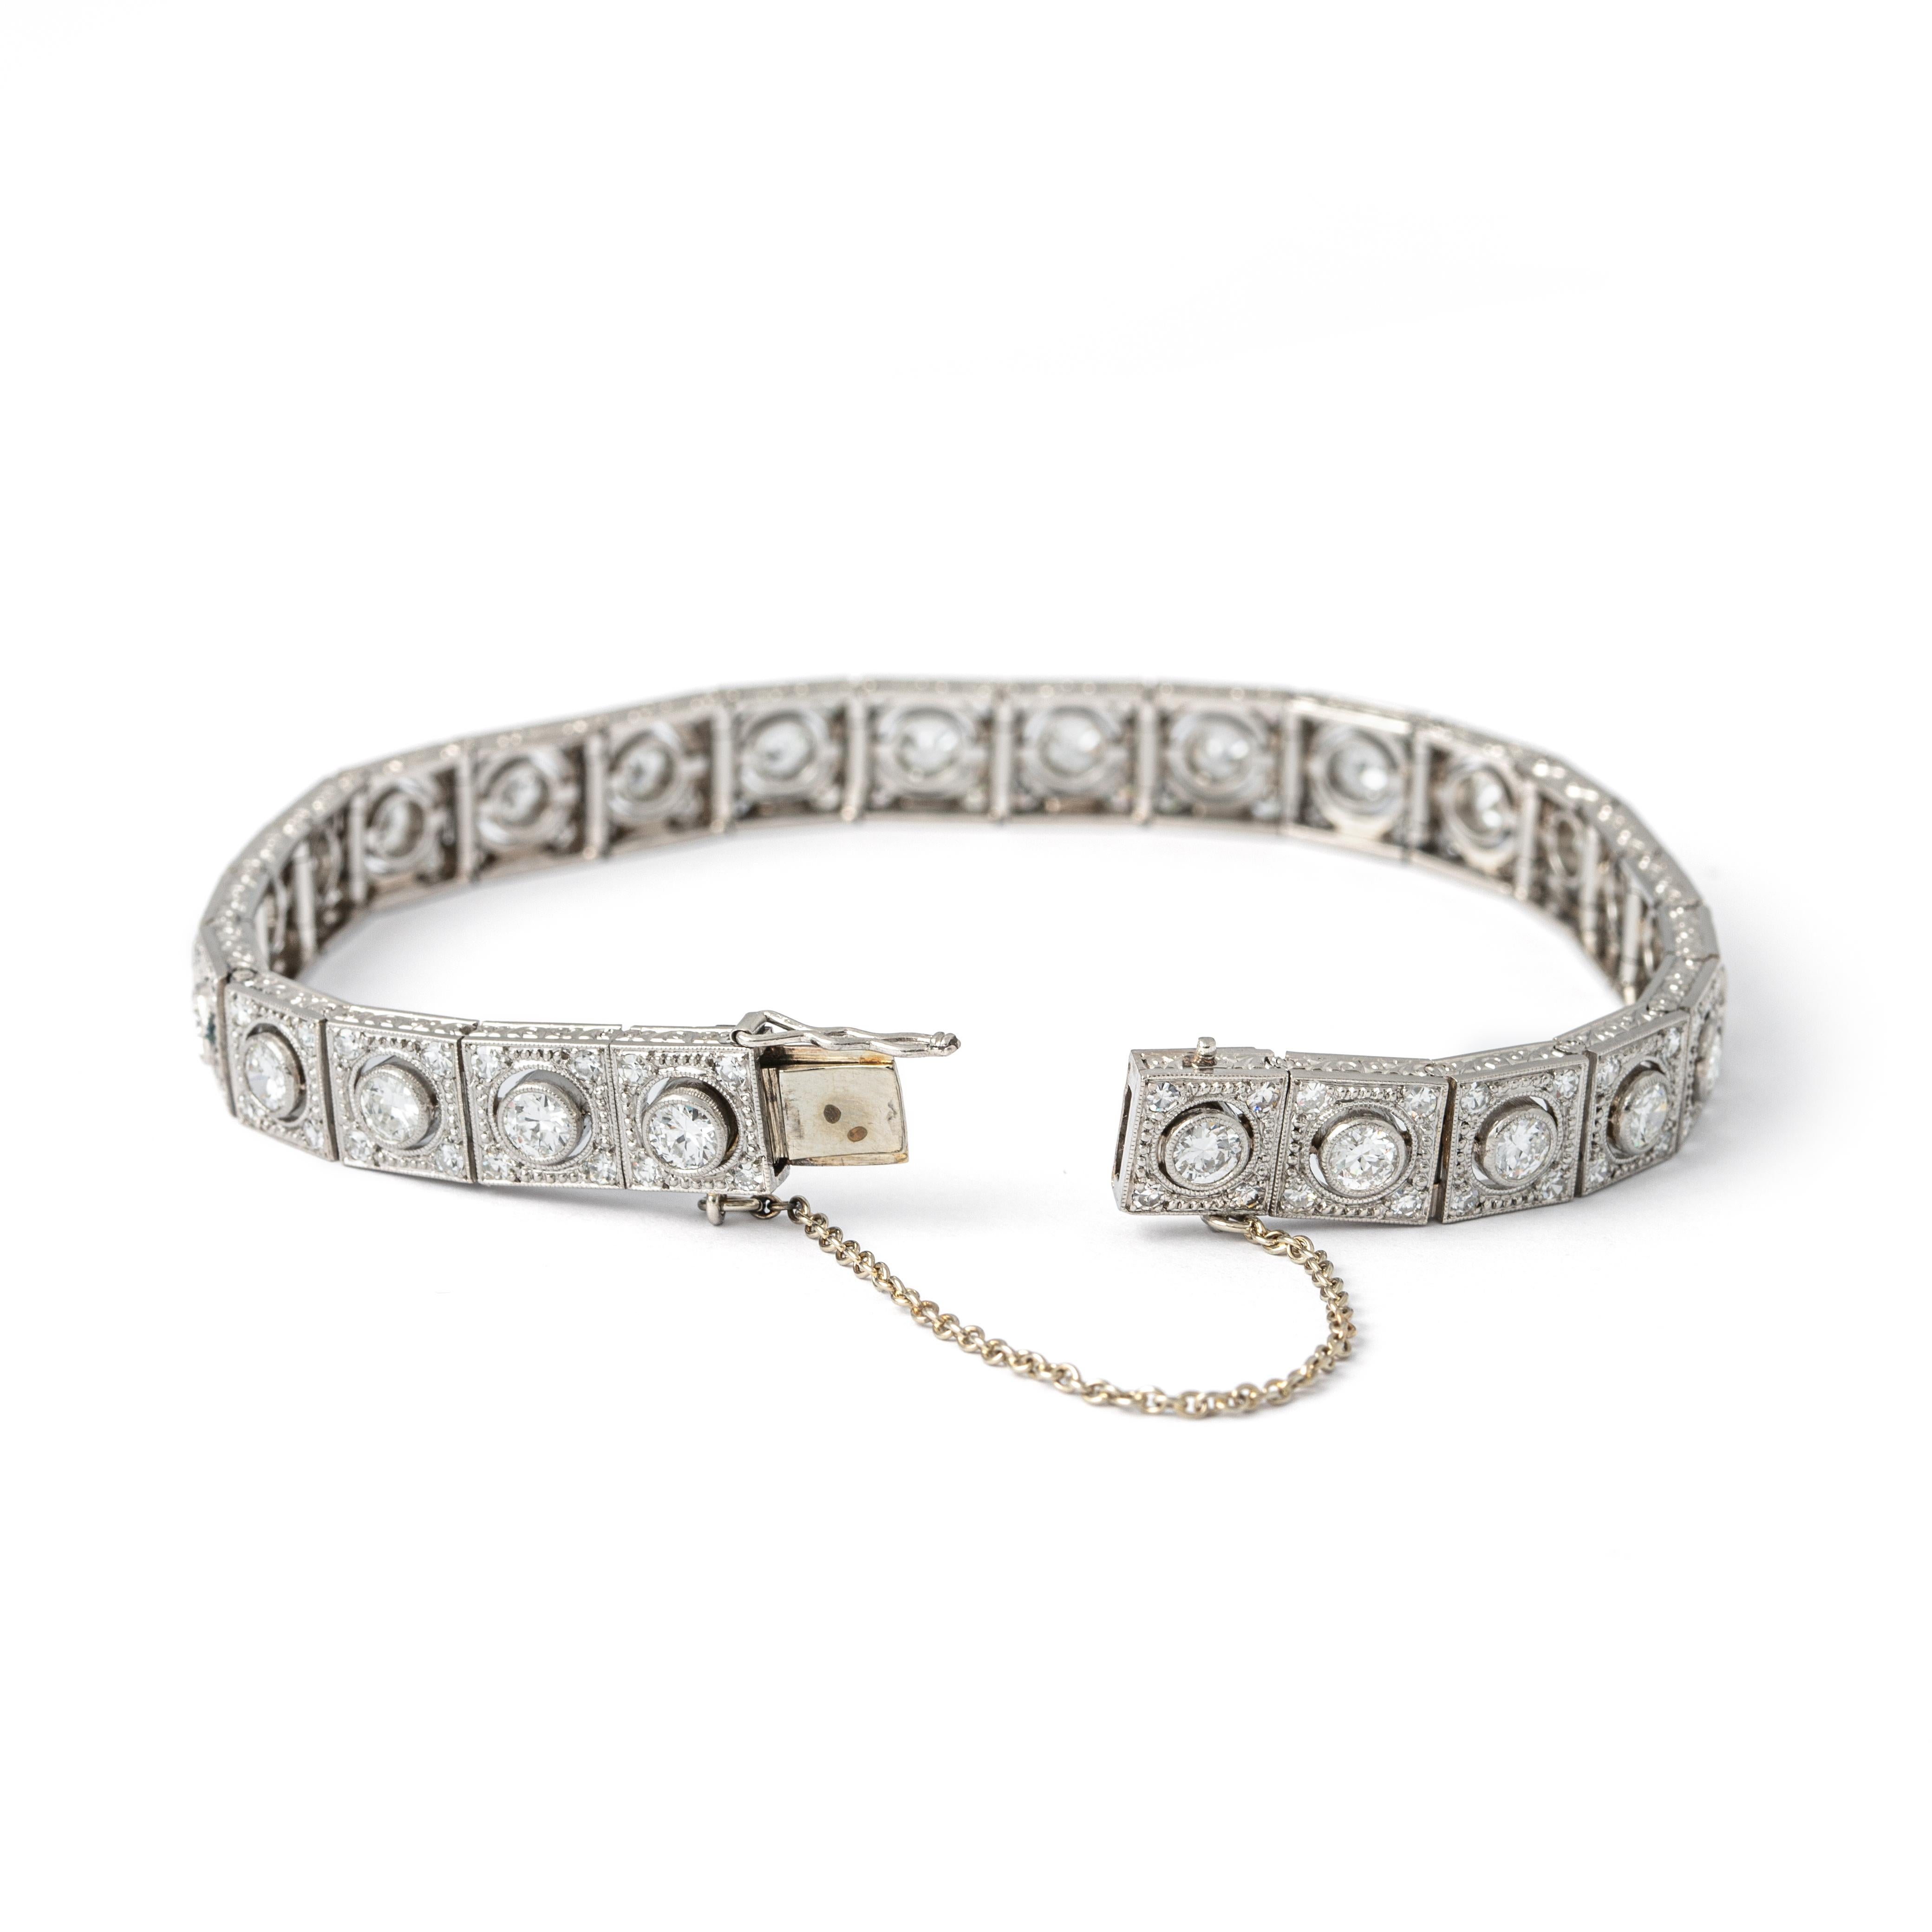 Art Deco Diamond Platinum Bracelet.
Platinum bracelet set with 26 diamonds approx. 0.15ct and 104 diamonds approx. 2.8 cz. Total 6.8 carats.

Total weight: 29.69 grams

Total length: approx. 18.00 centimeters.